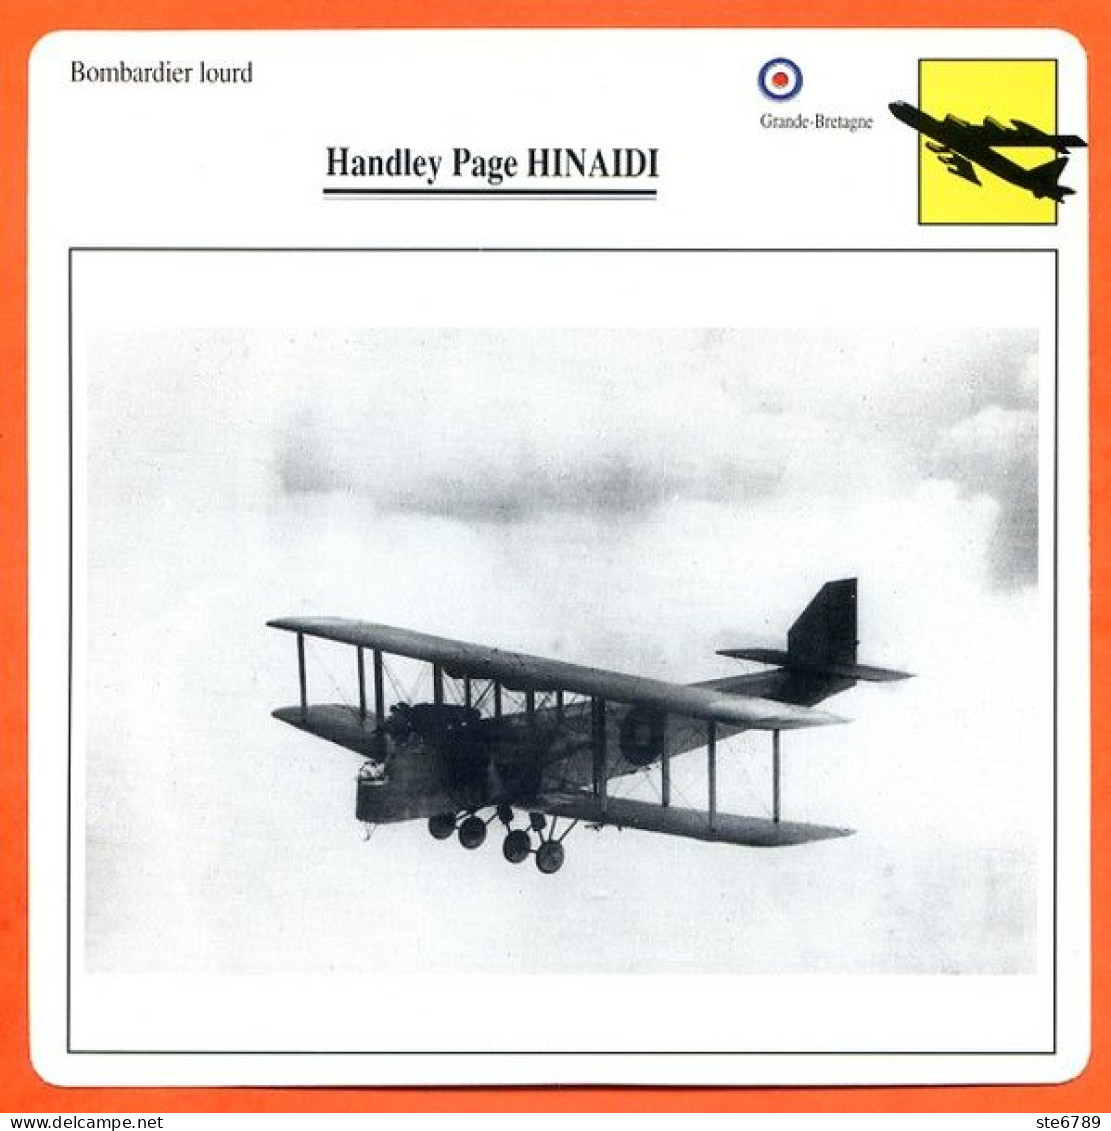 Fiche Aviation Handley Page HINAIDI  / Avion Bombardier Lourd UK Avions - Flugzeuge